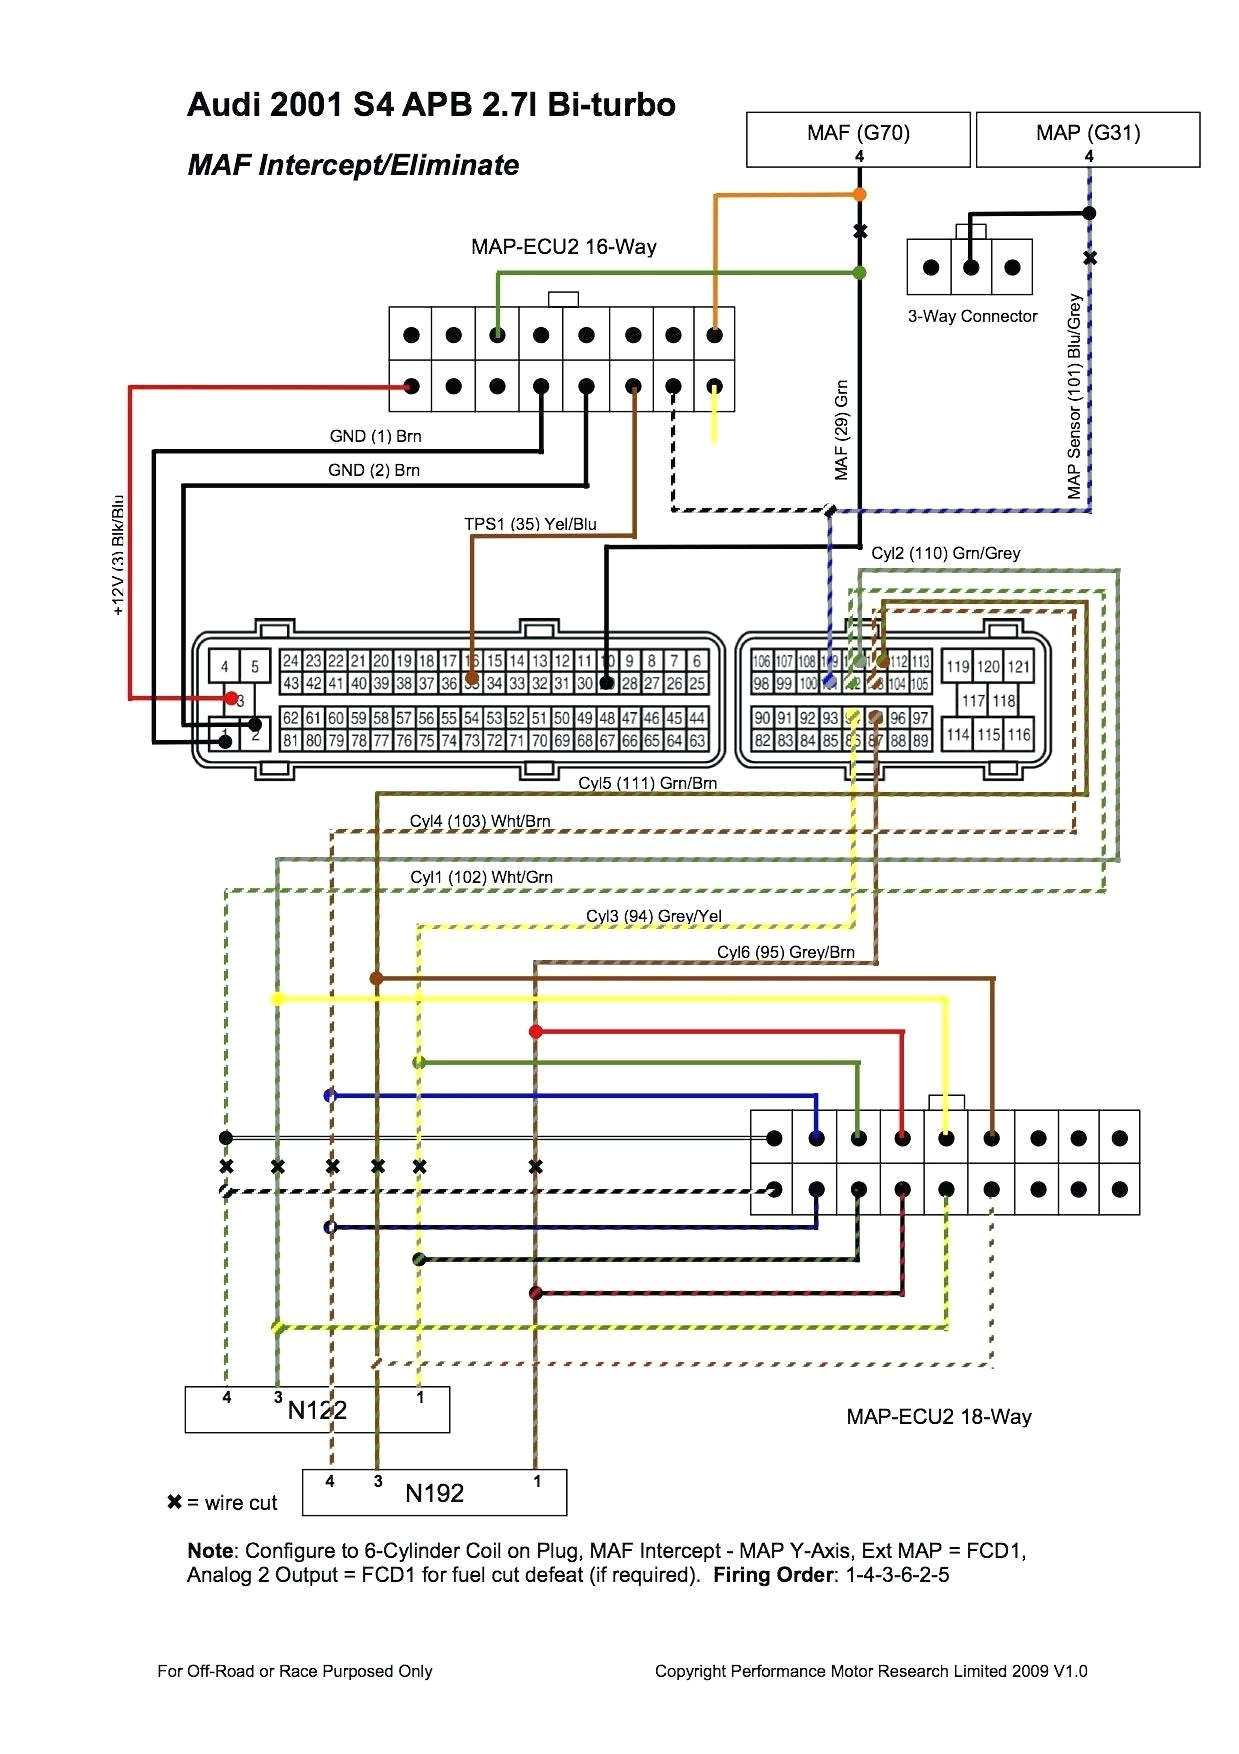 ignition system wiring diagram 1992 dodge dakota fuel pump circuit 1990 dakota fuel pump wiring diagram